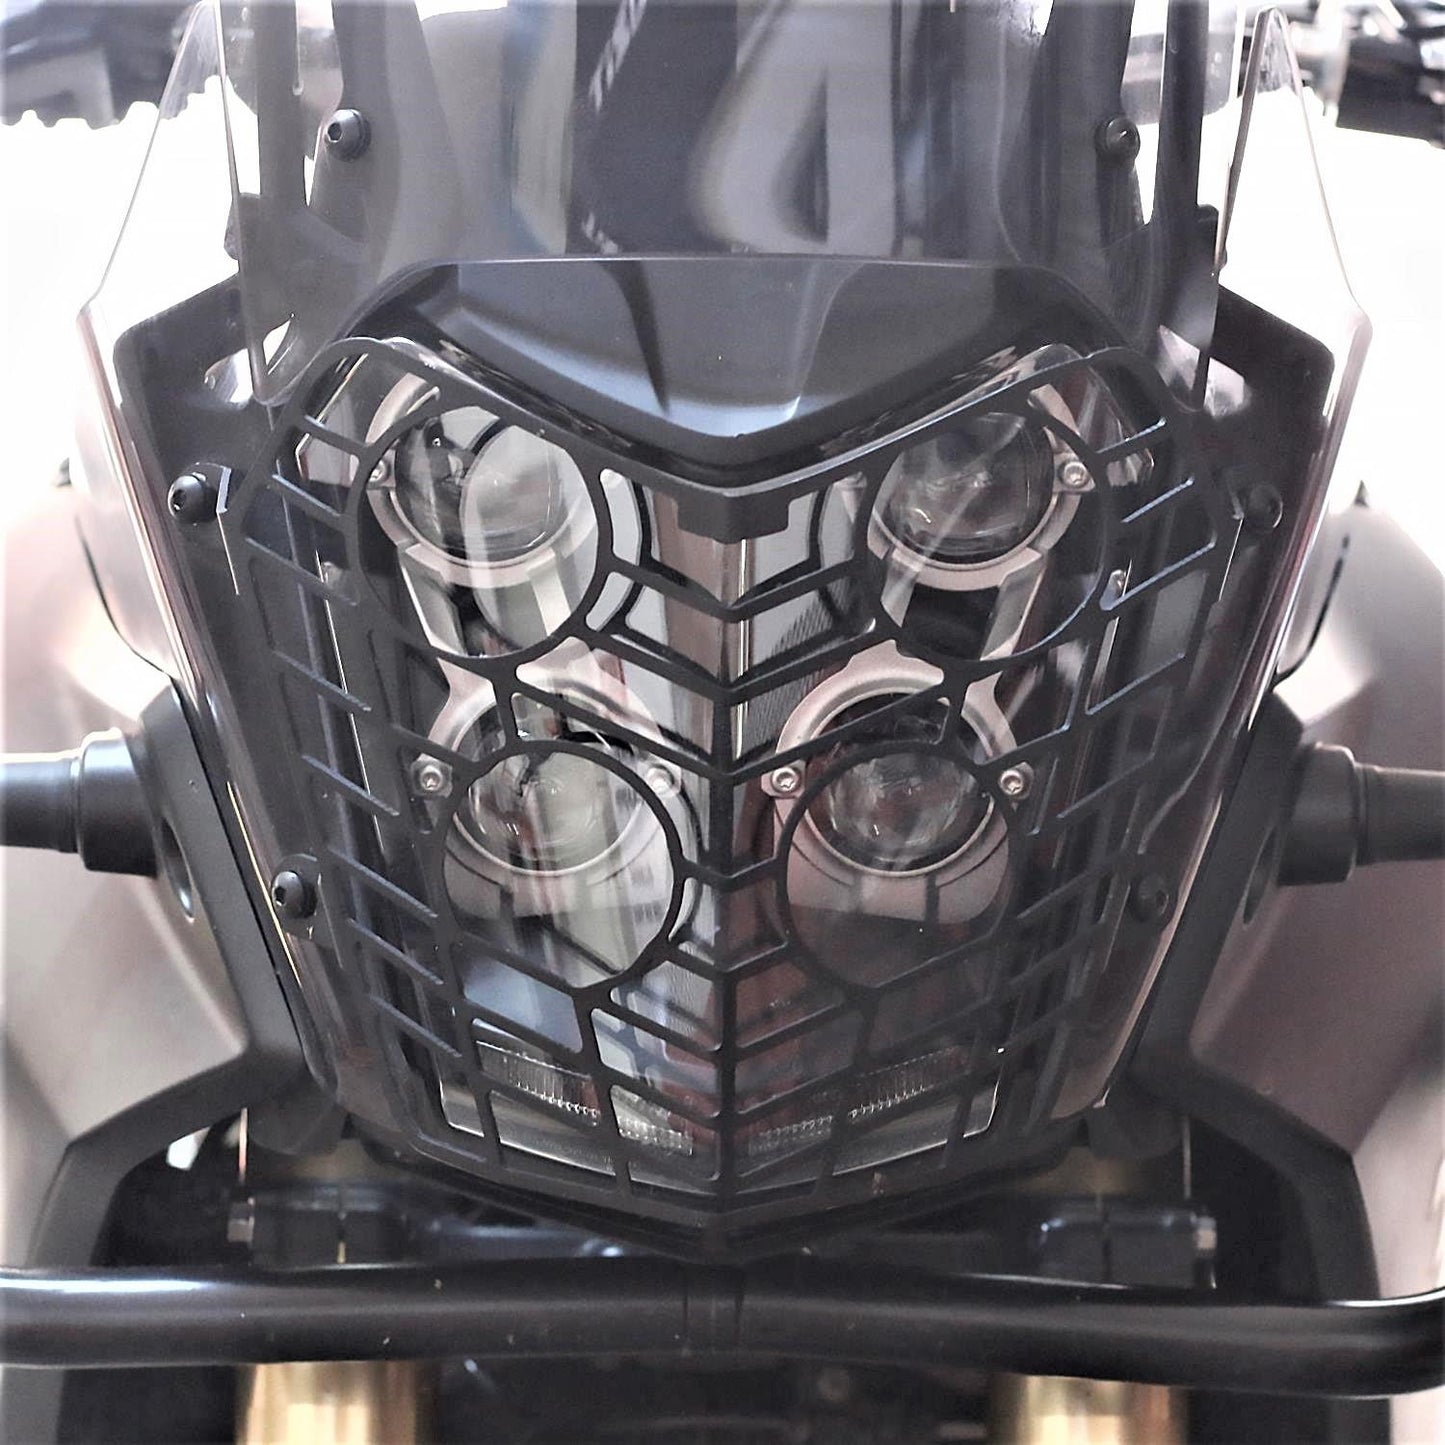 Yamaha Tenere700 headlight guard aluminum protector 2019 onwards